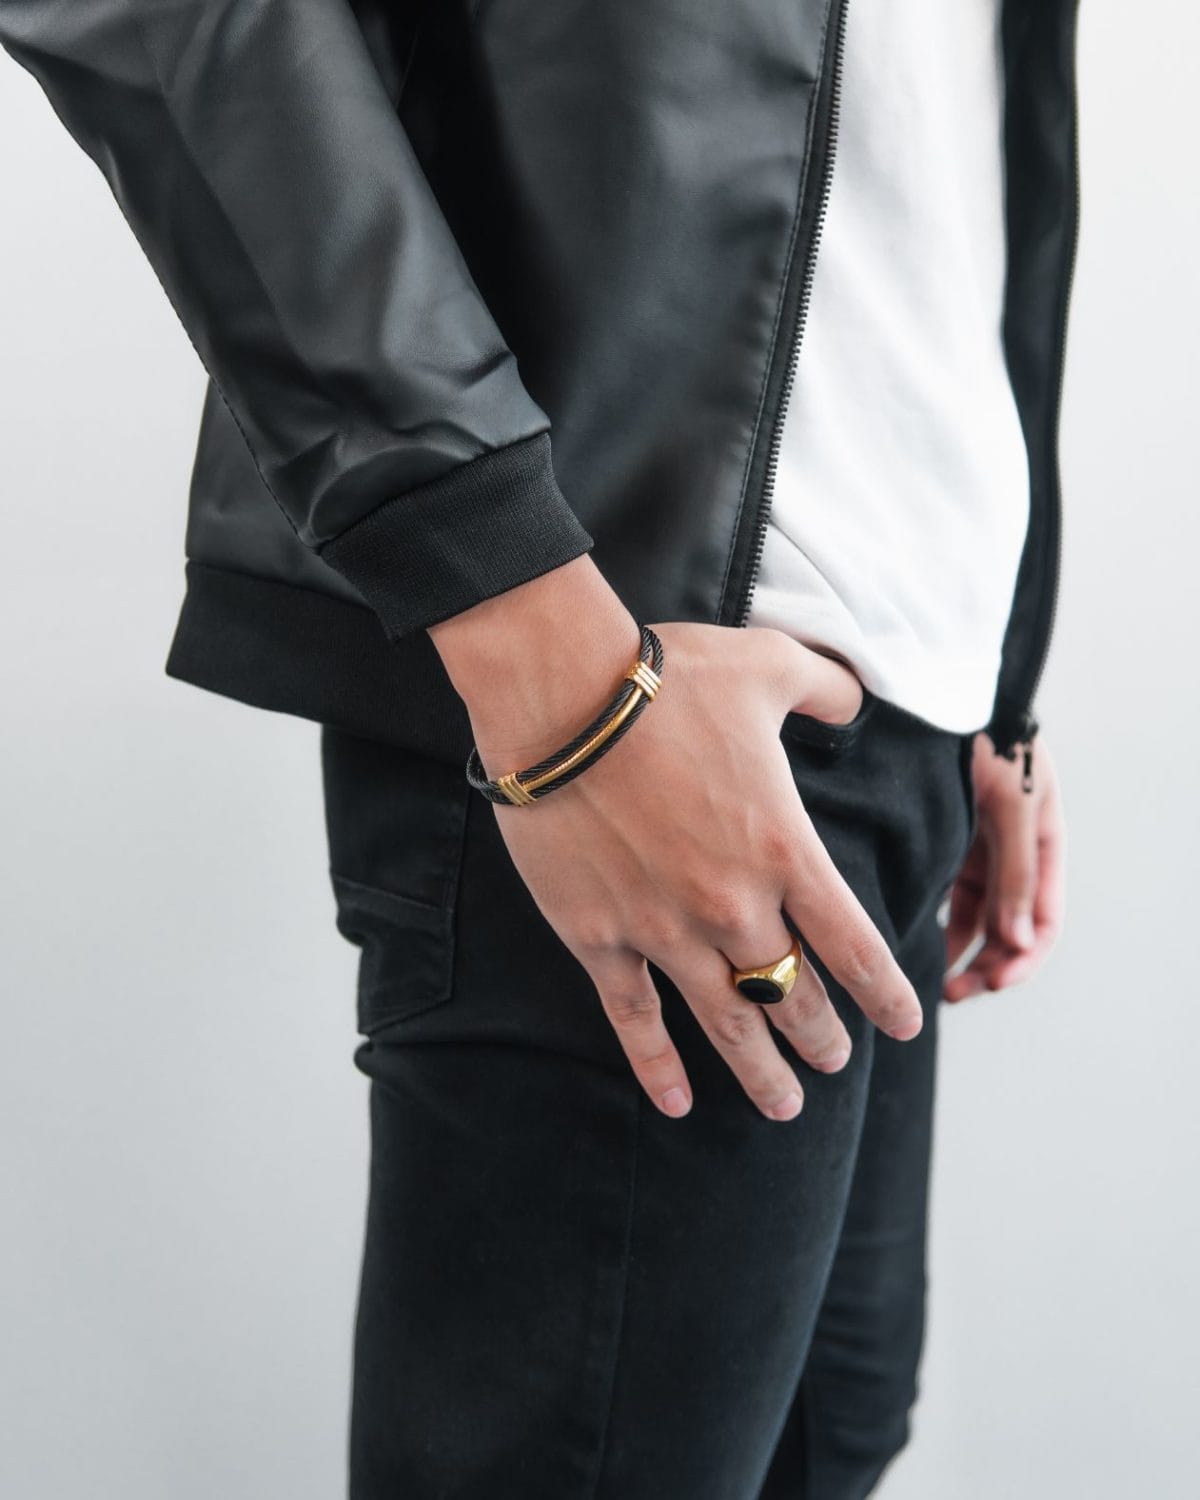 https://m.clubbella.co/product/urban-steel-cable-cuff-bracelet-black-gold/ DSC00036